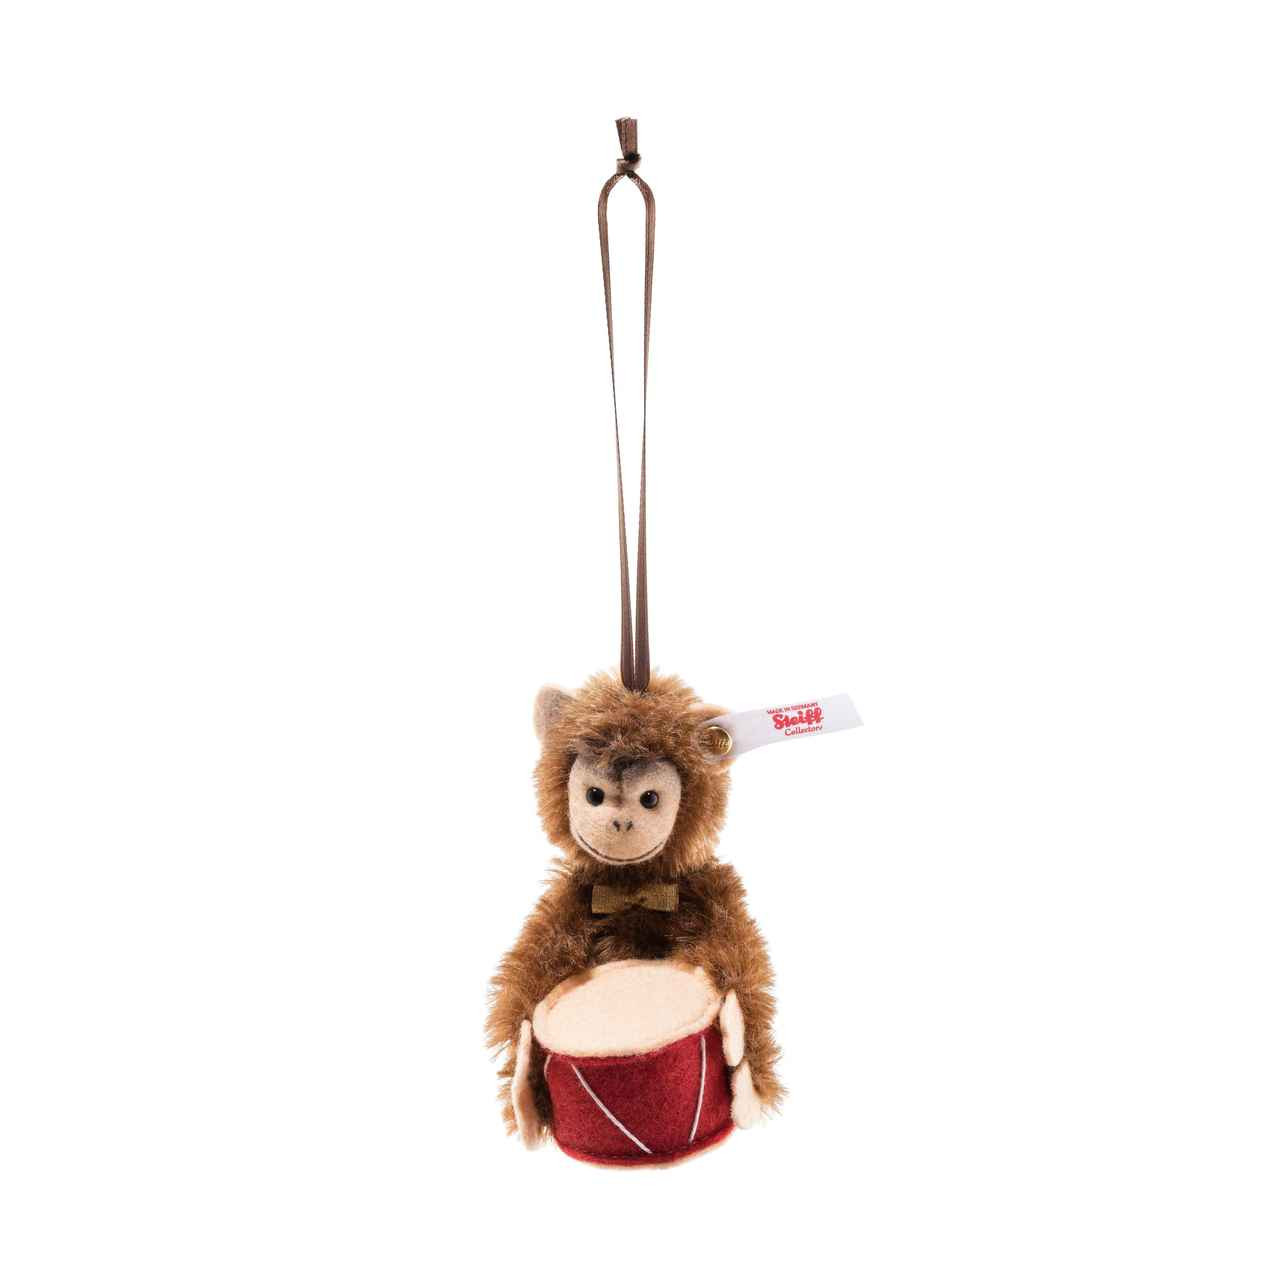 jocko the monkey toy